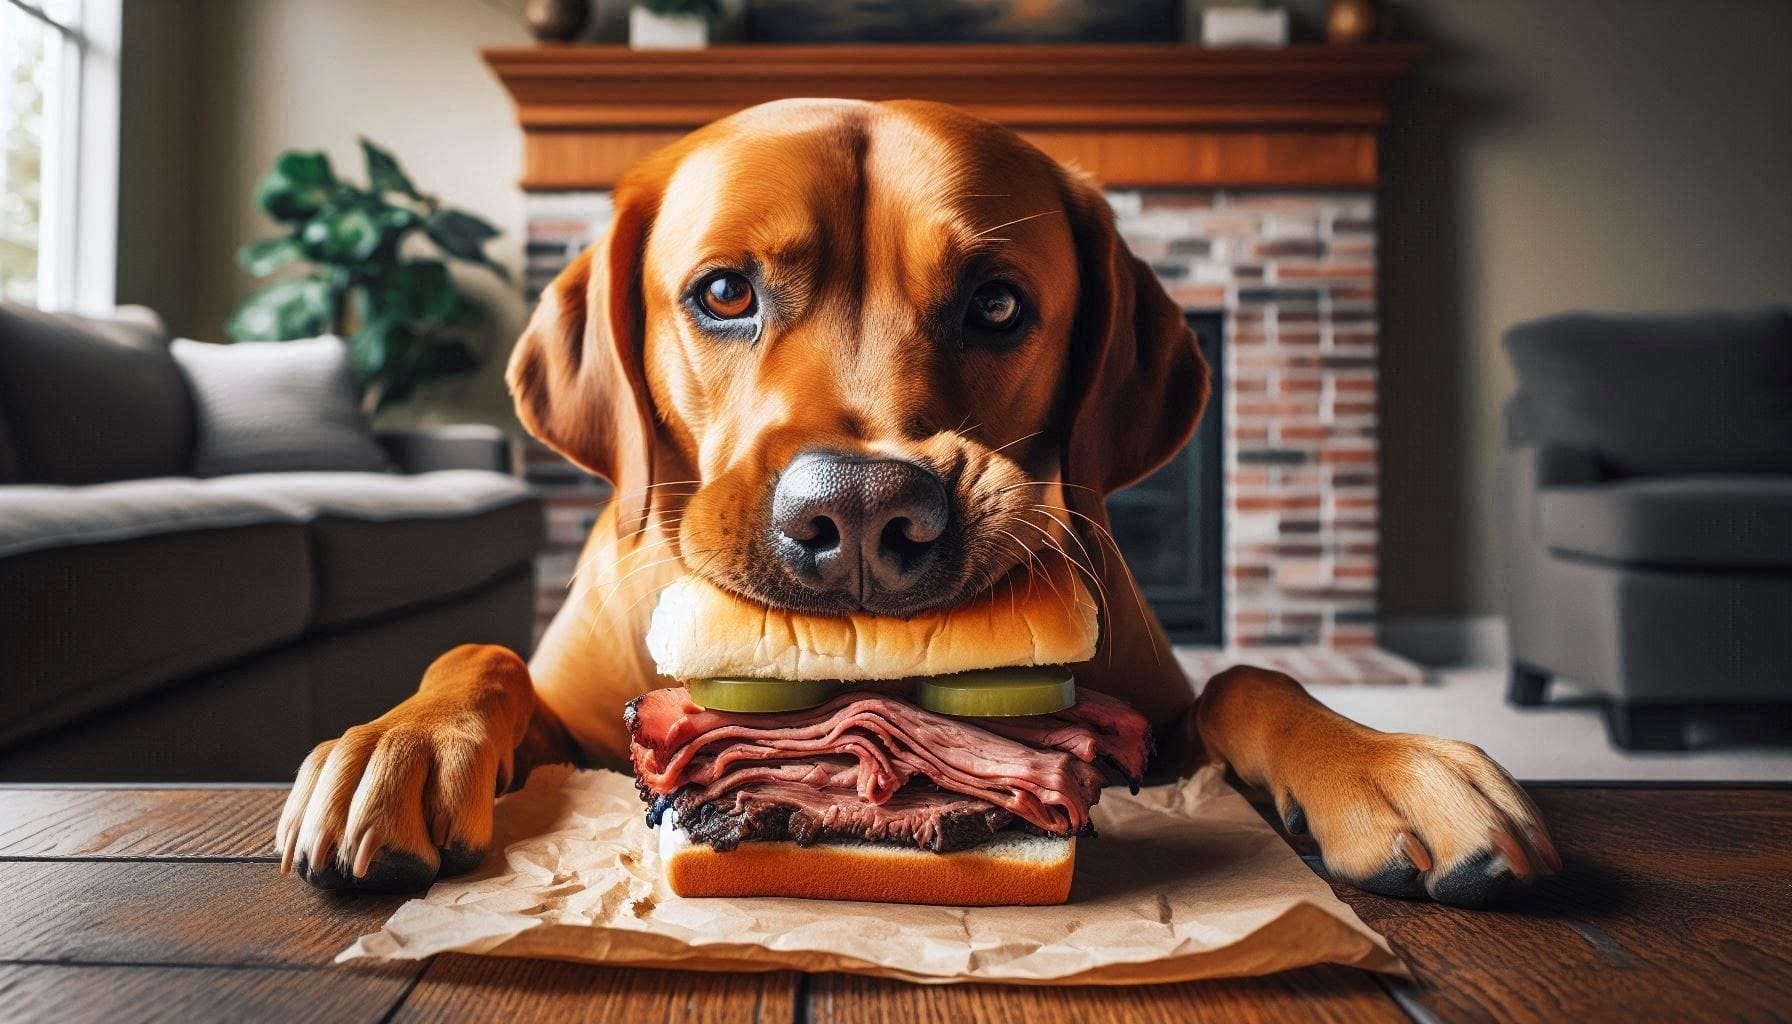 Dogs Eating Arby's Roast Beef Sandwich